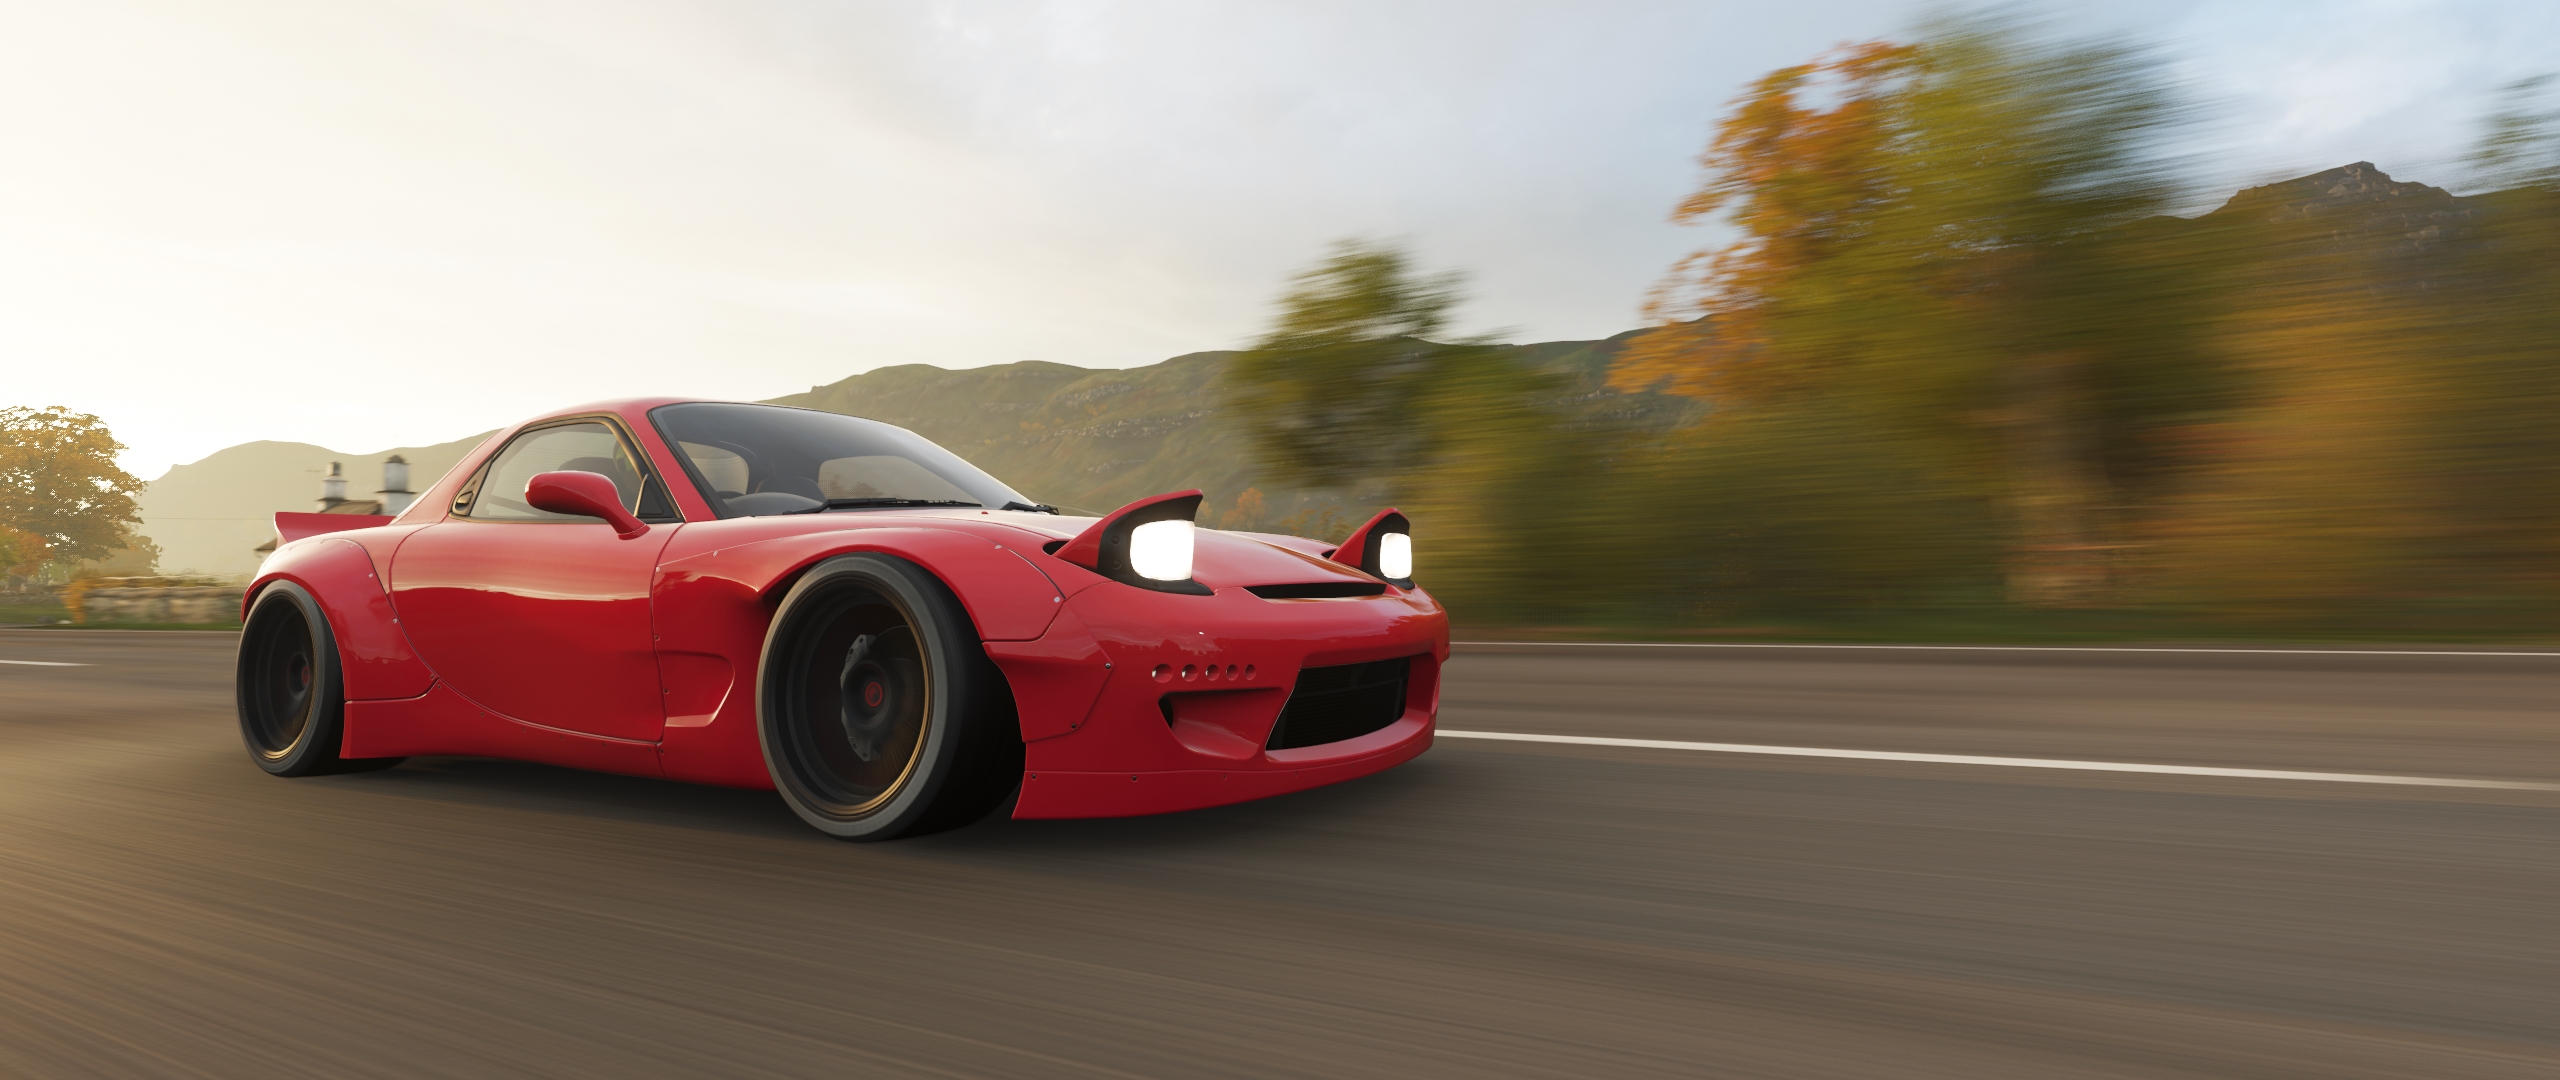 General 2560x1080 Forza Horizon 4 car video games red cars vehicle screen shot